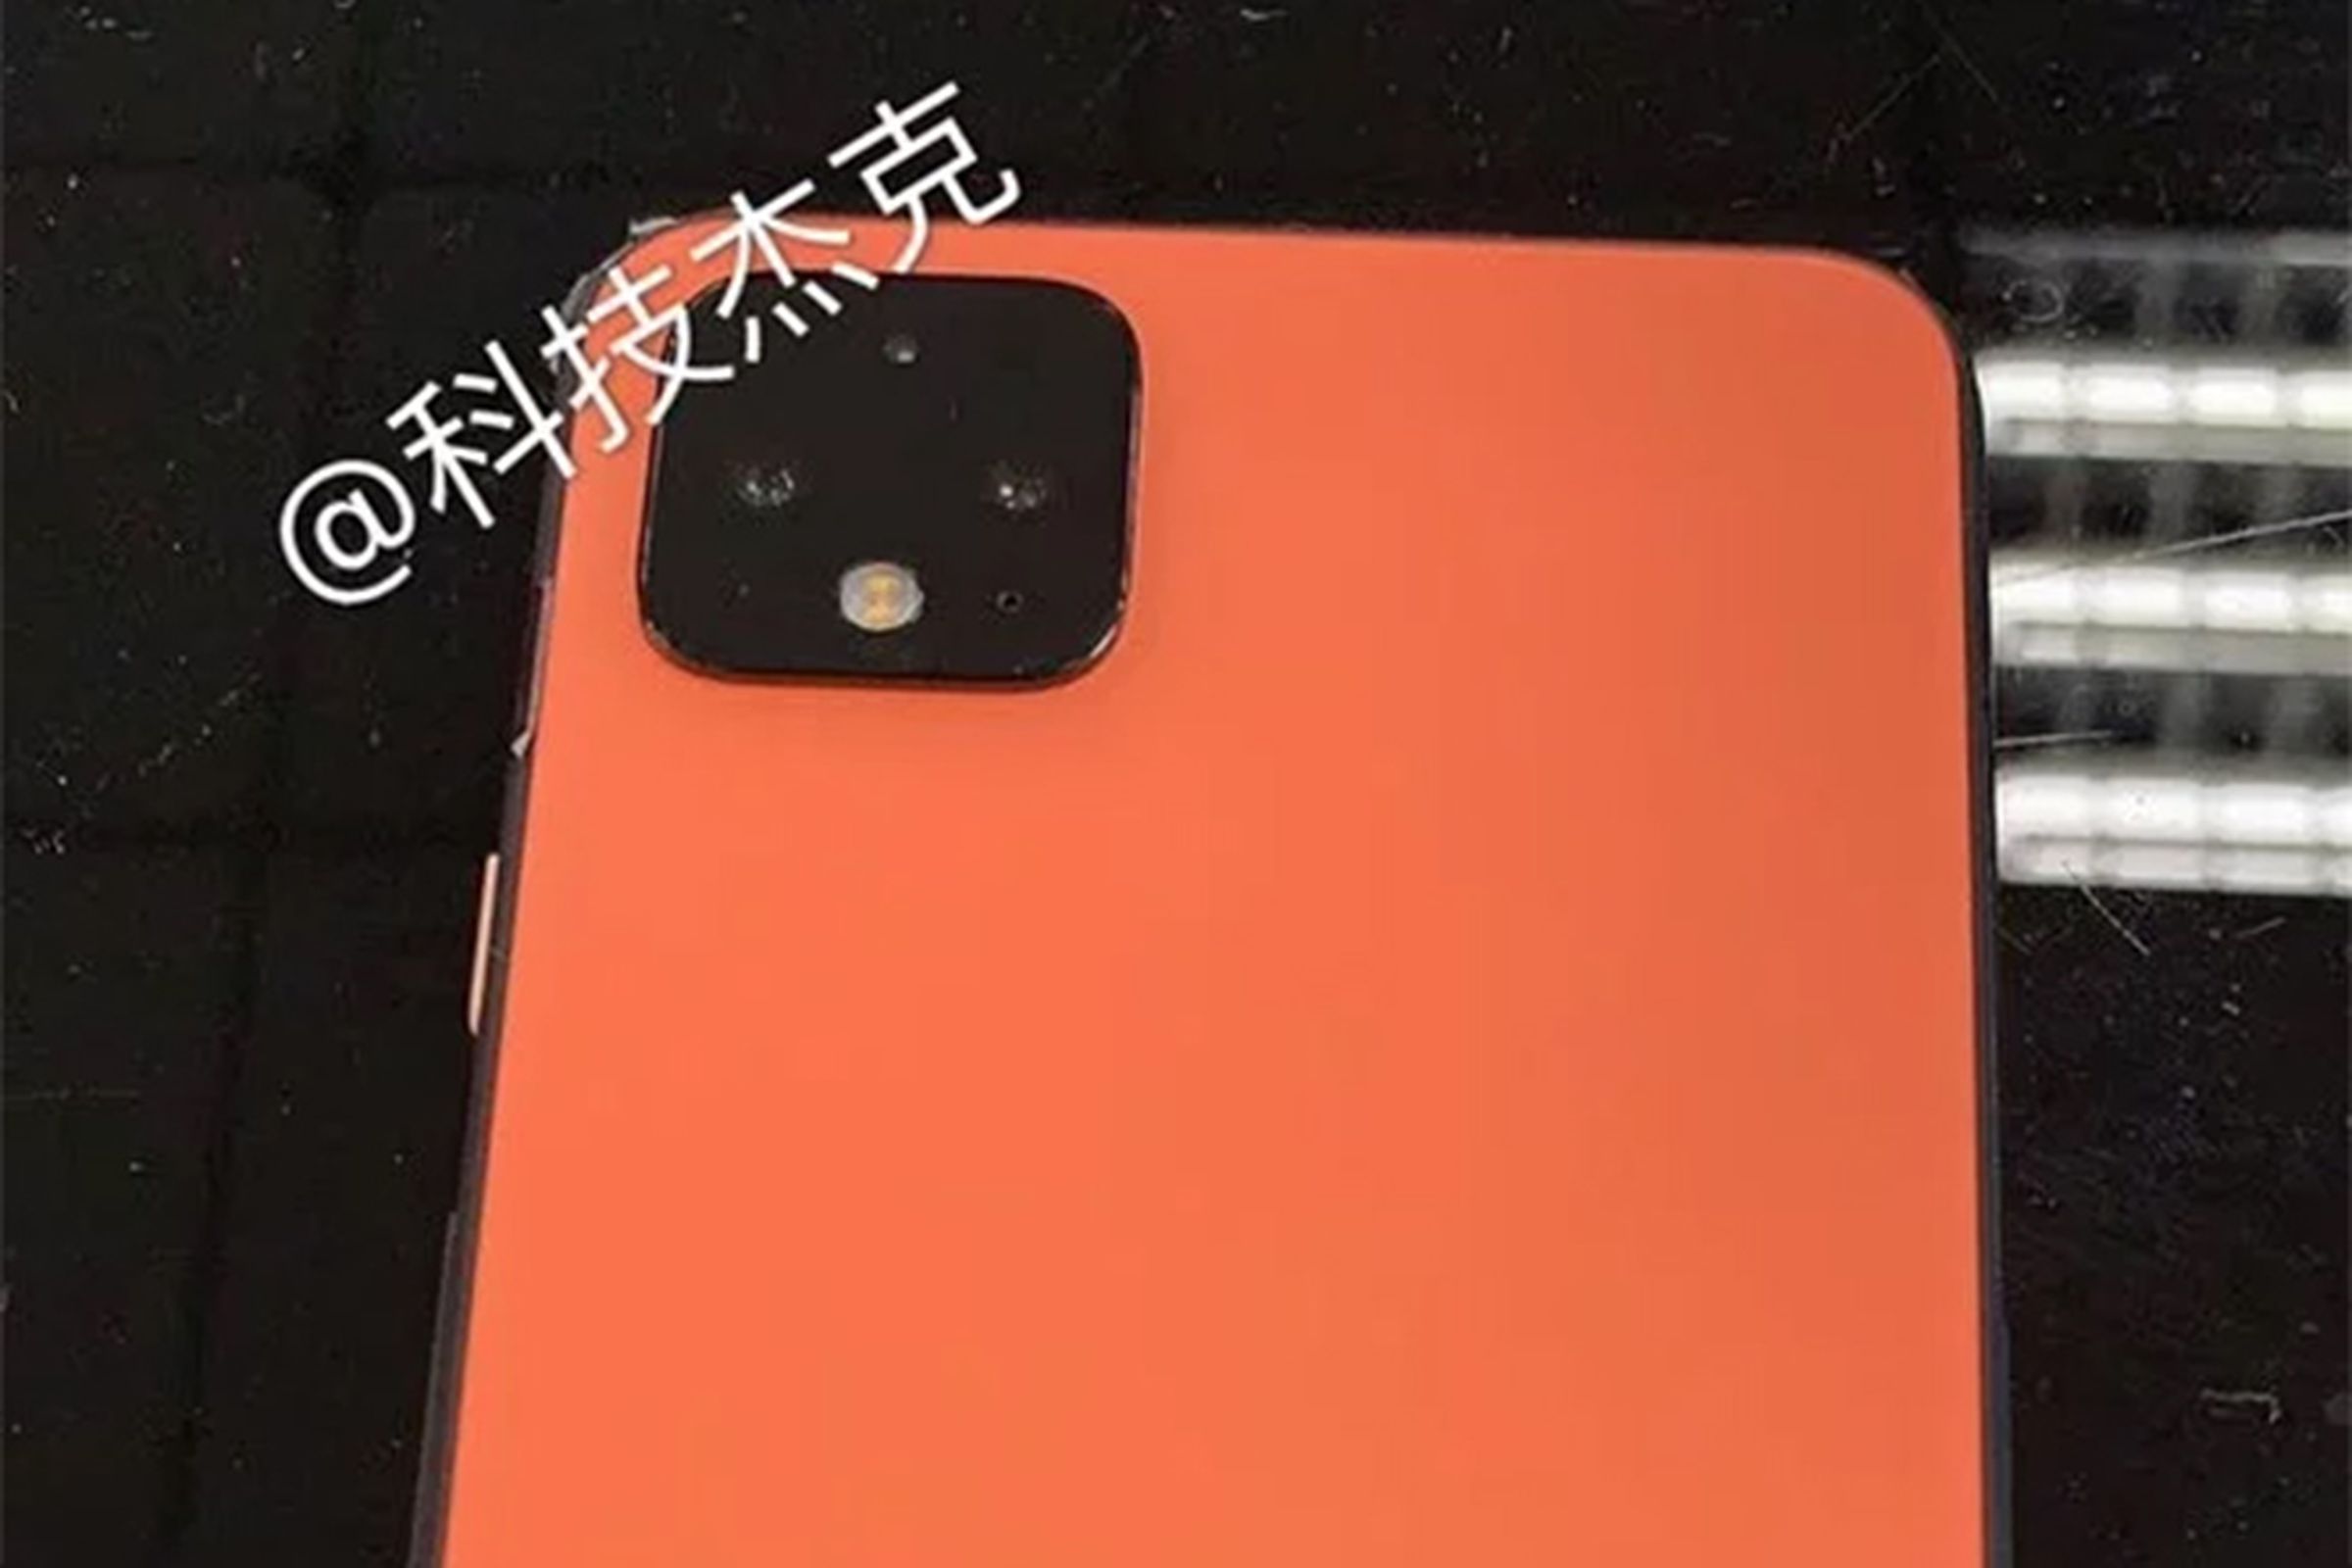 Rumored Pixel 4 orange color